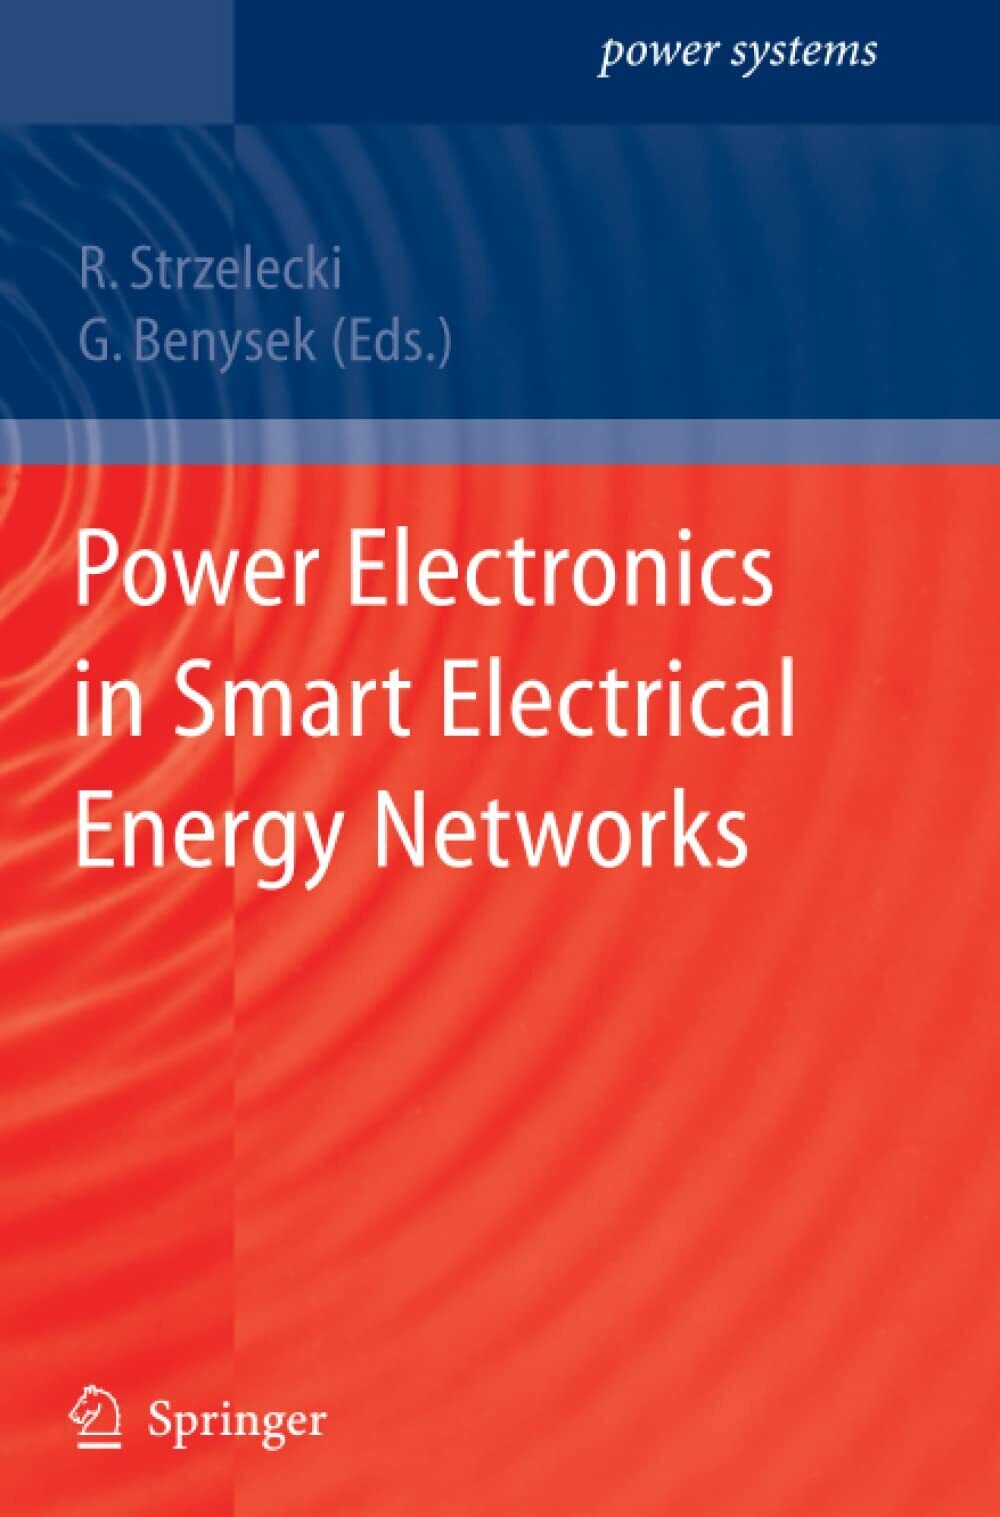 Power Electronics in Smart Electrical Energy Networks - R. Strzelecki - 2010 libro usato